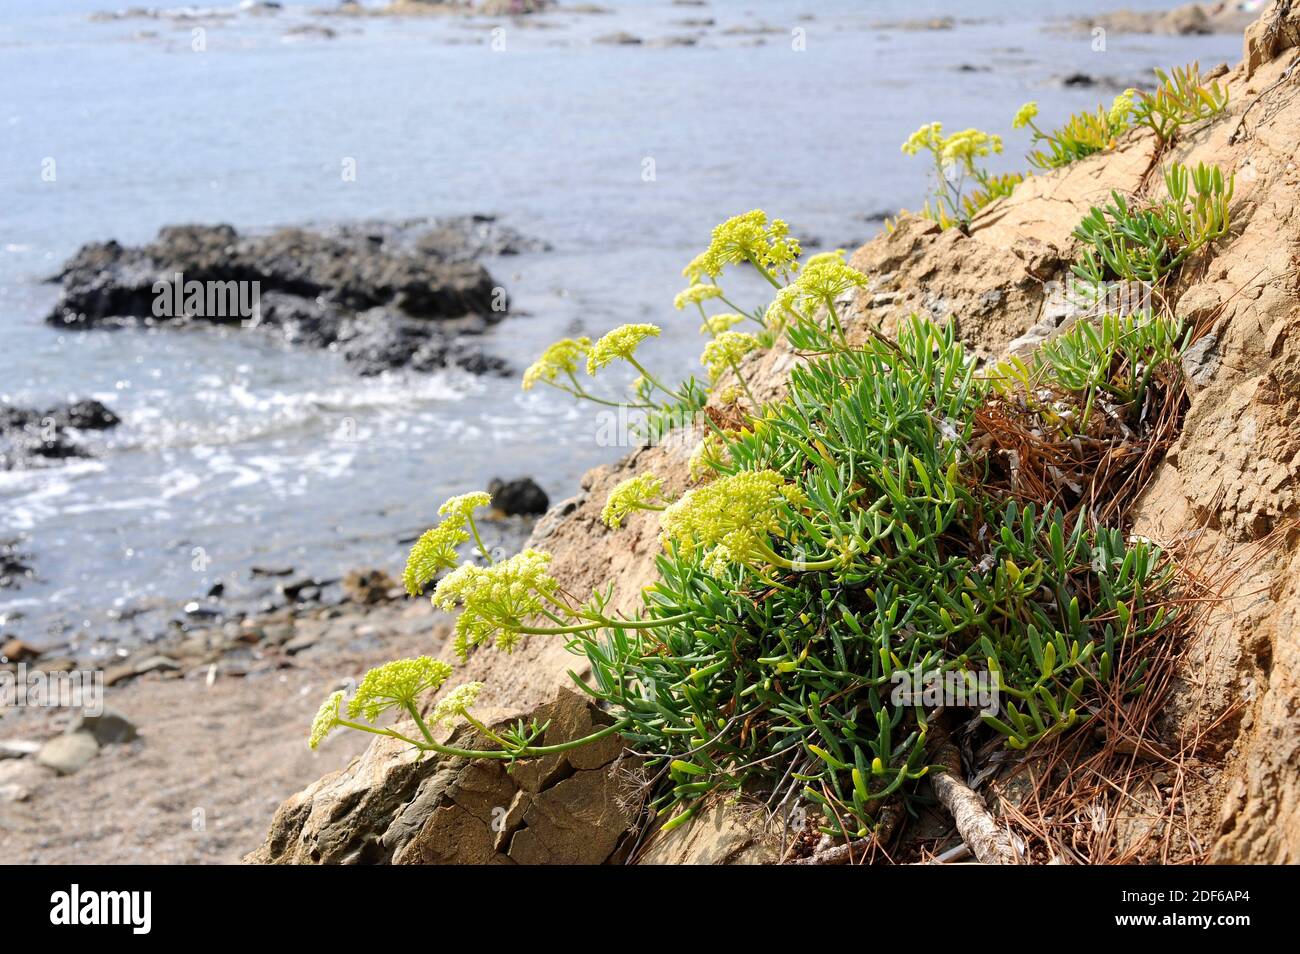 Rock samphire or sea fennel (Crithmum maritimum) is an edible perennial herb native to the Mediterranean coast, Britain, Ireland and Canary Islands. Stock Photo